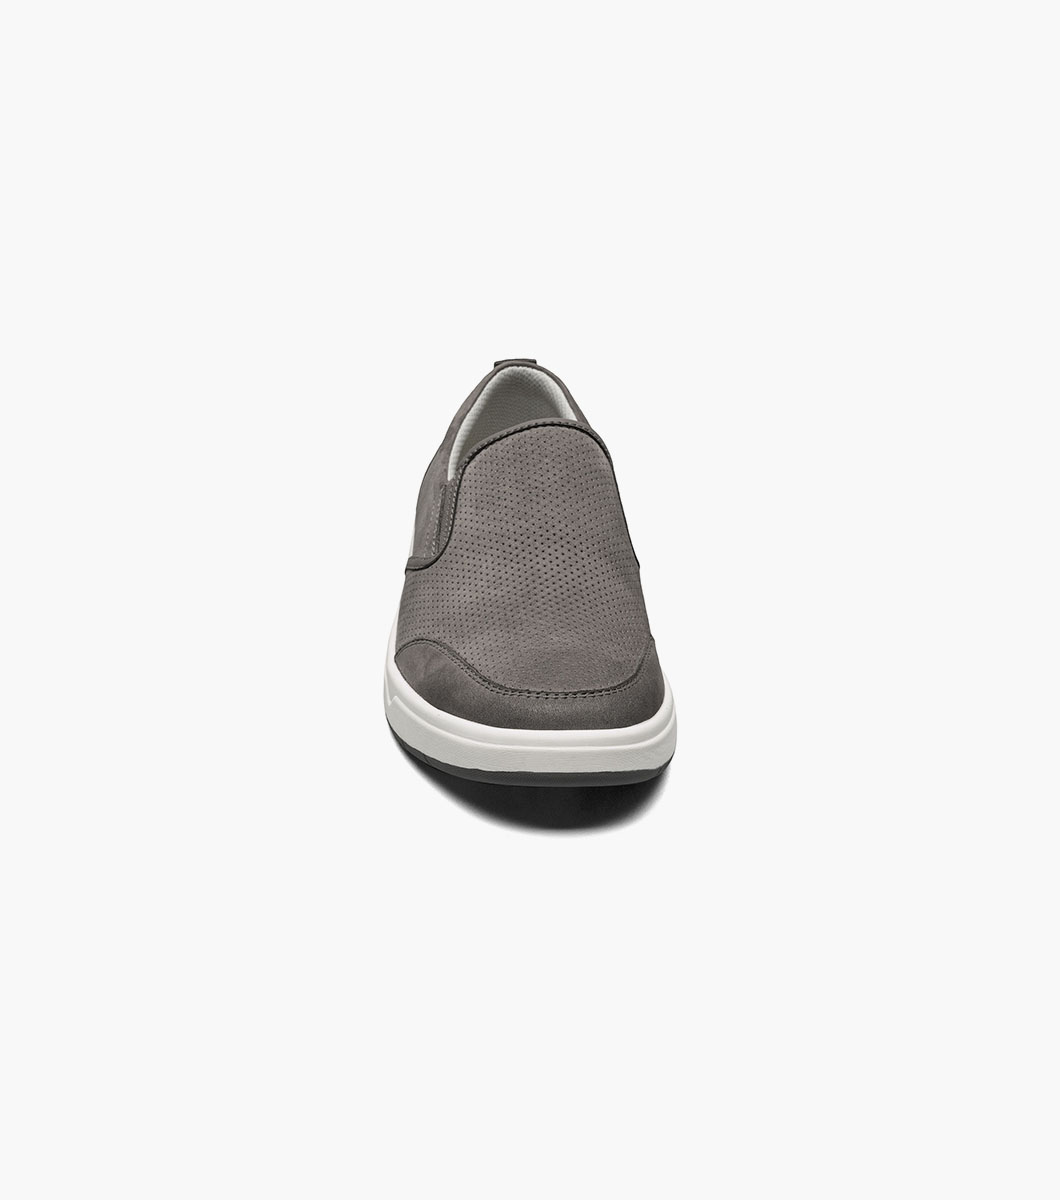 Heist Moc Toe Slip On Sneaker Men’s Casual Shoes | Florsheim.com